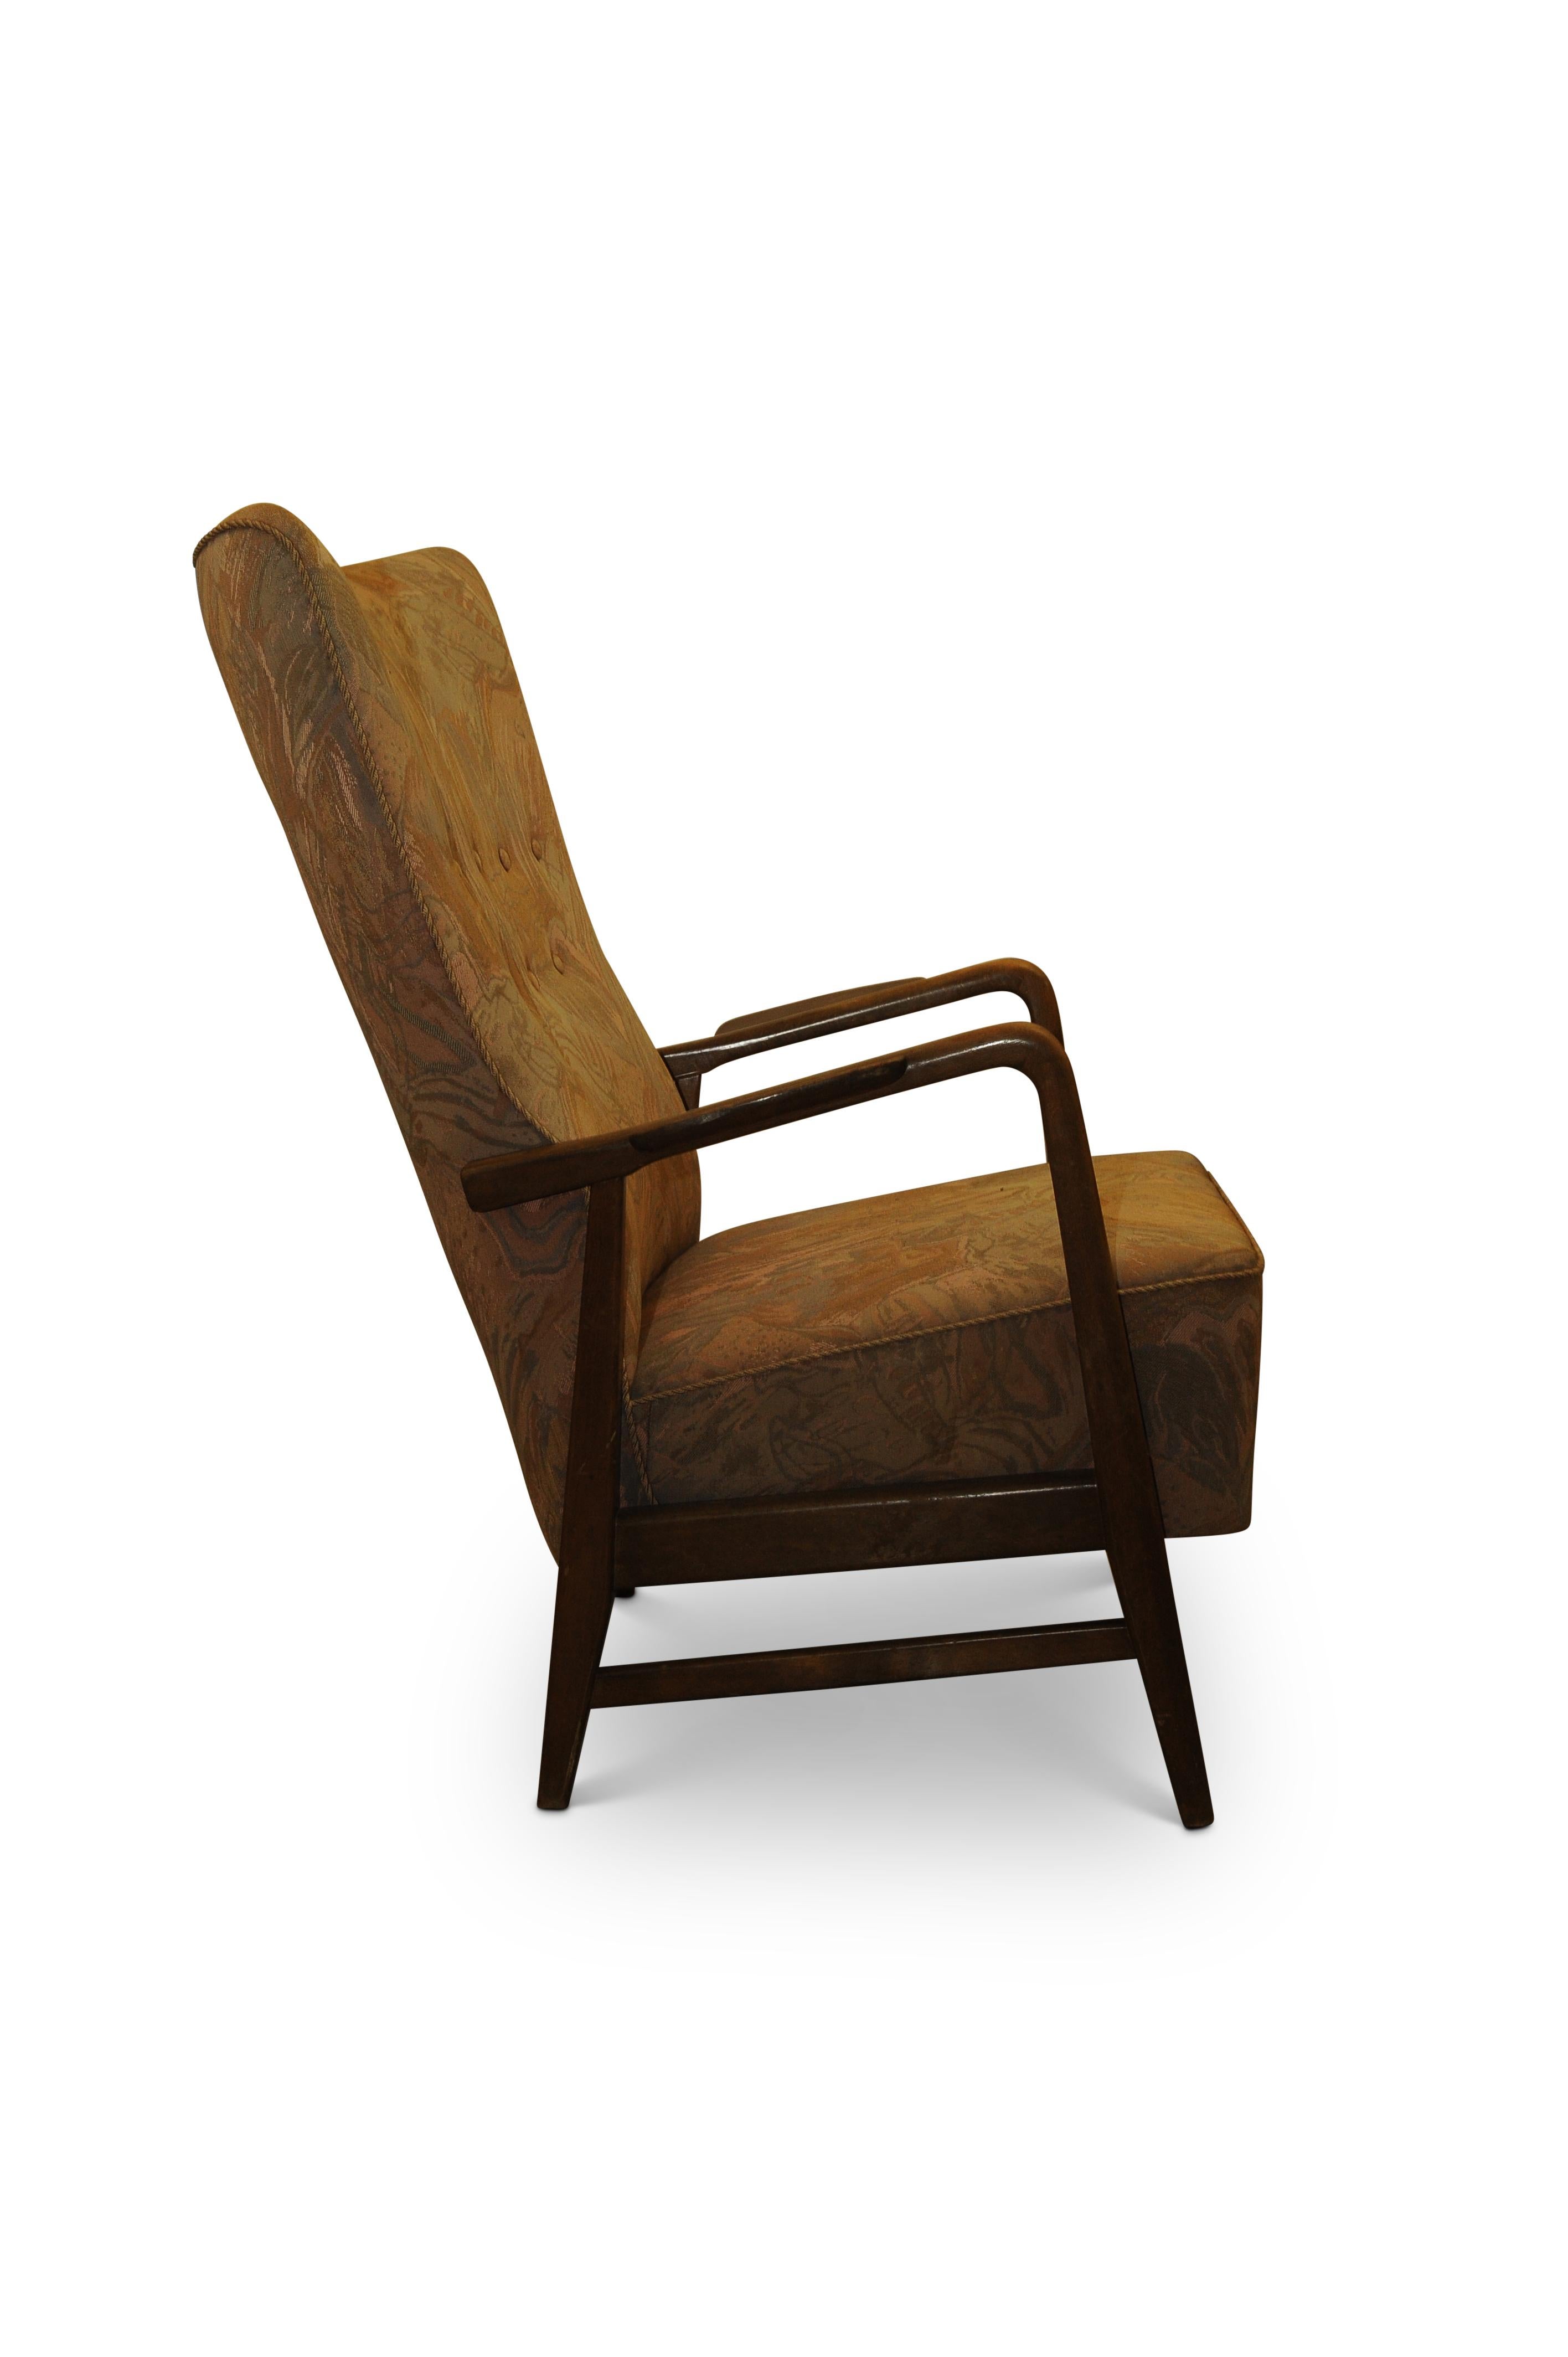 Scandinavian Modern Folke Ohlsson DUX Scandinavian Mid-Century Modern Armchair Patterned Upholstery For Sale